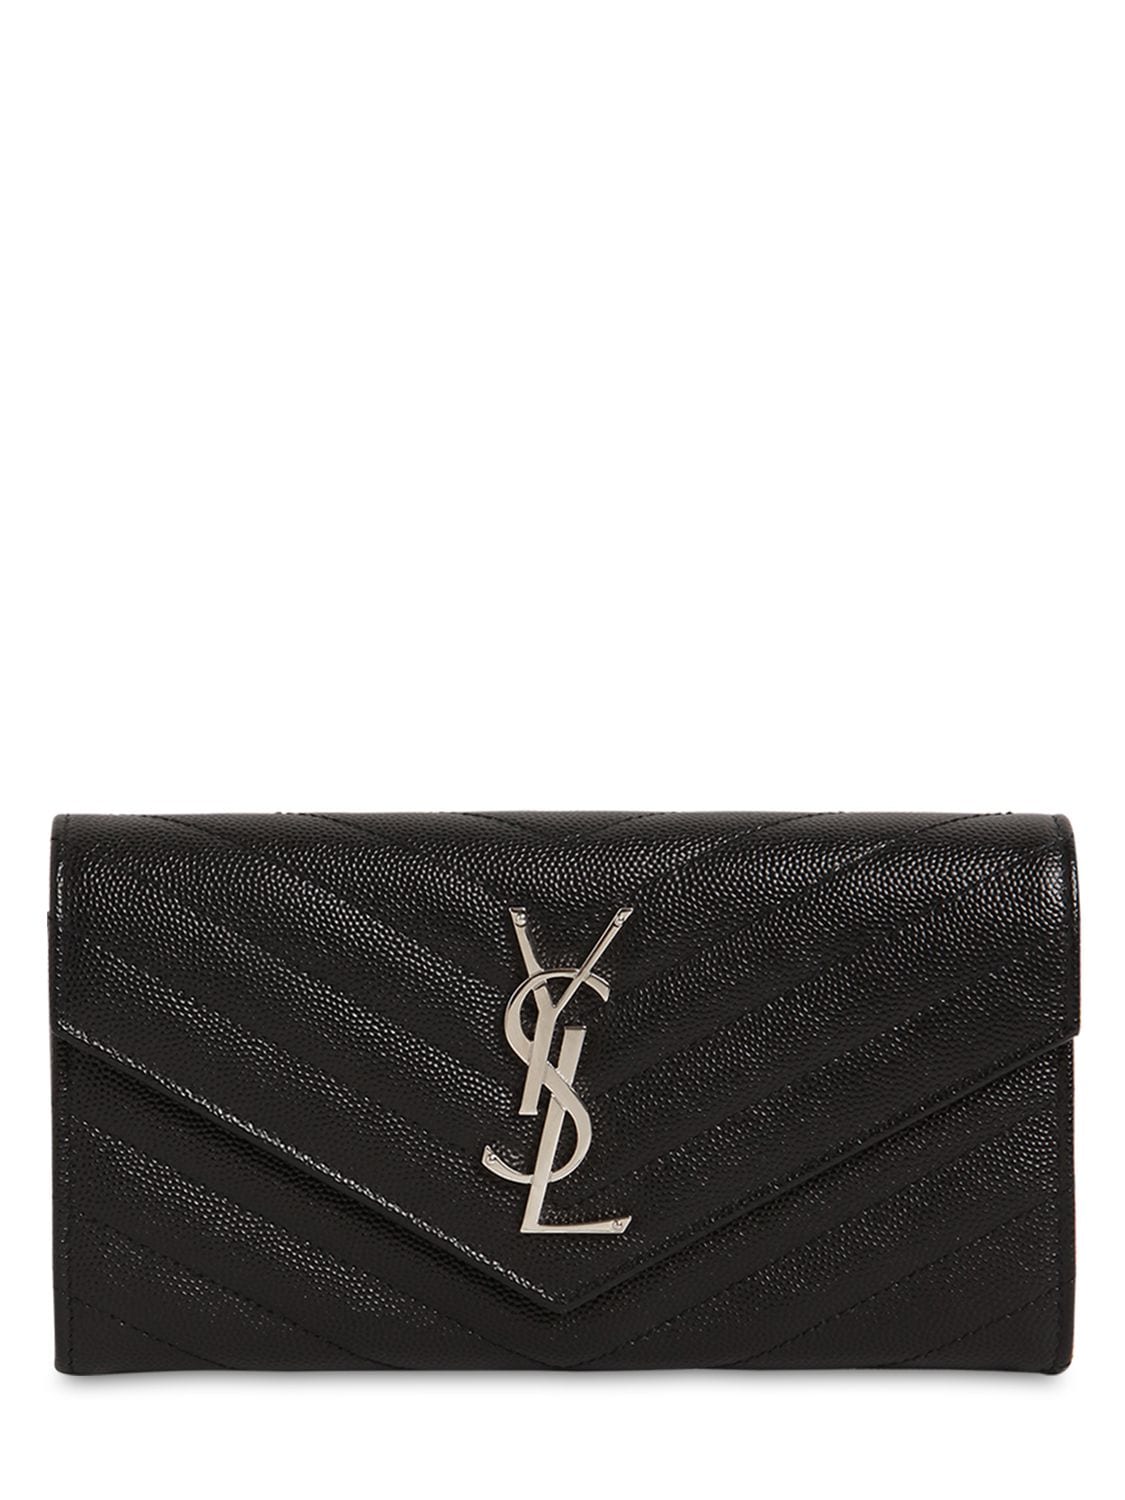 Saint Laurent Large Monogram Quilted Leather Wallet In Black